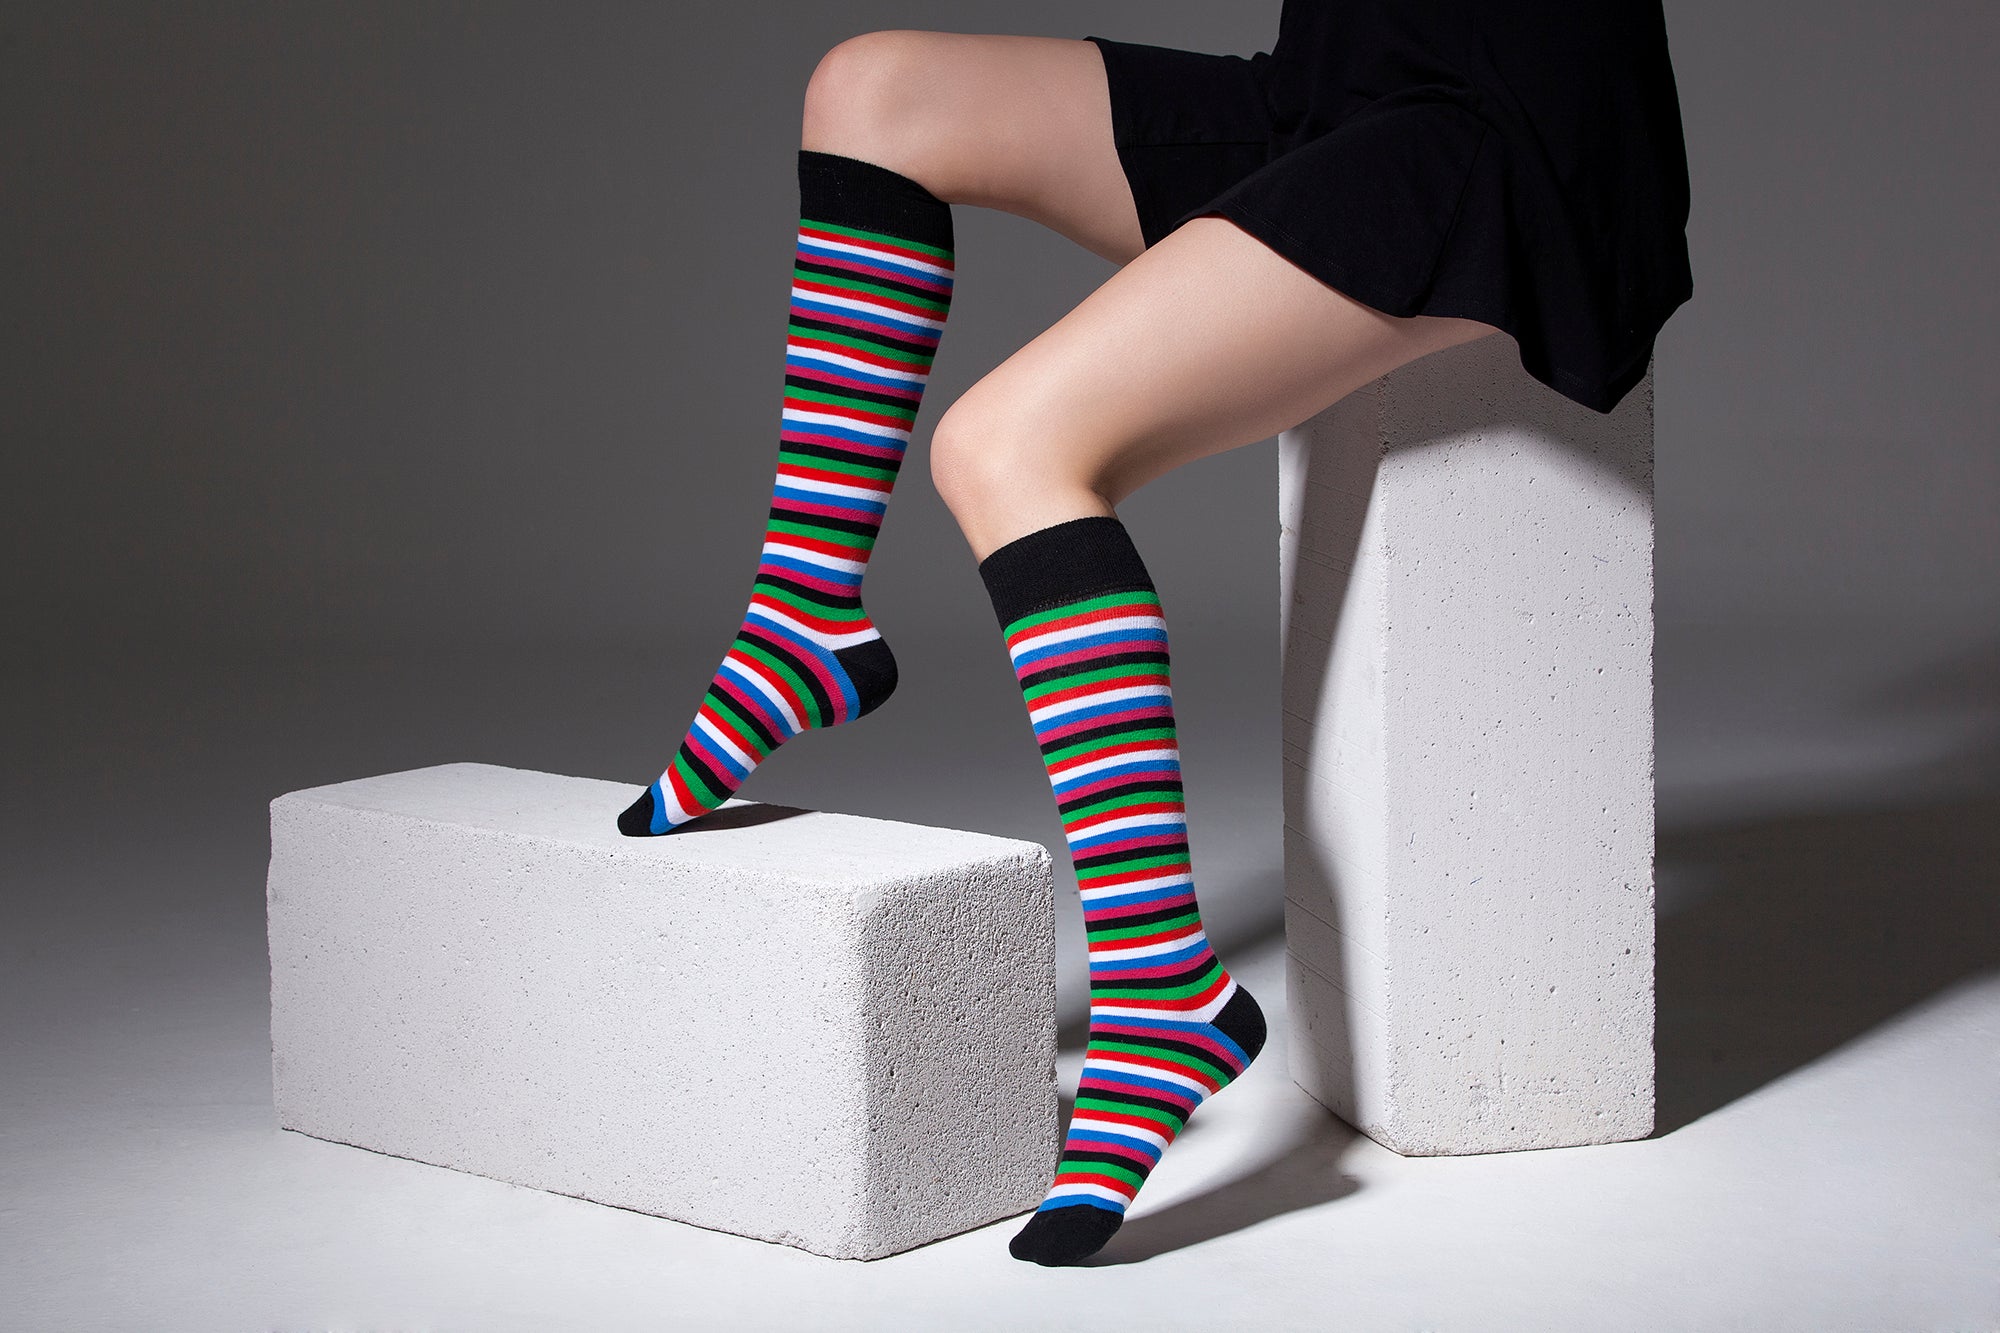 Women's Colorful Stripe Knee High Socks Set - Socks n Socks